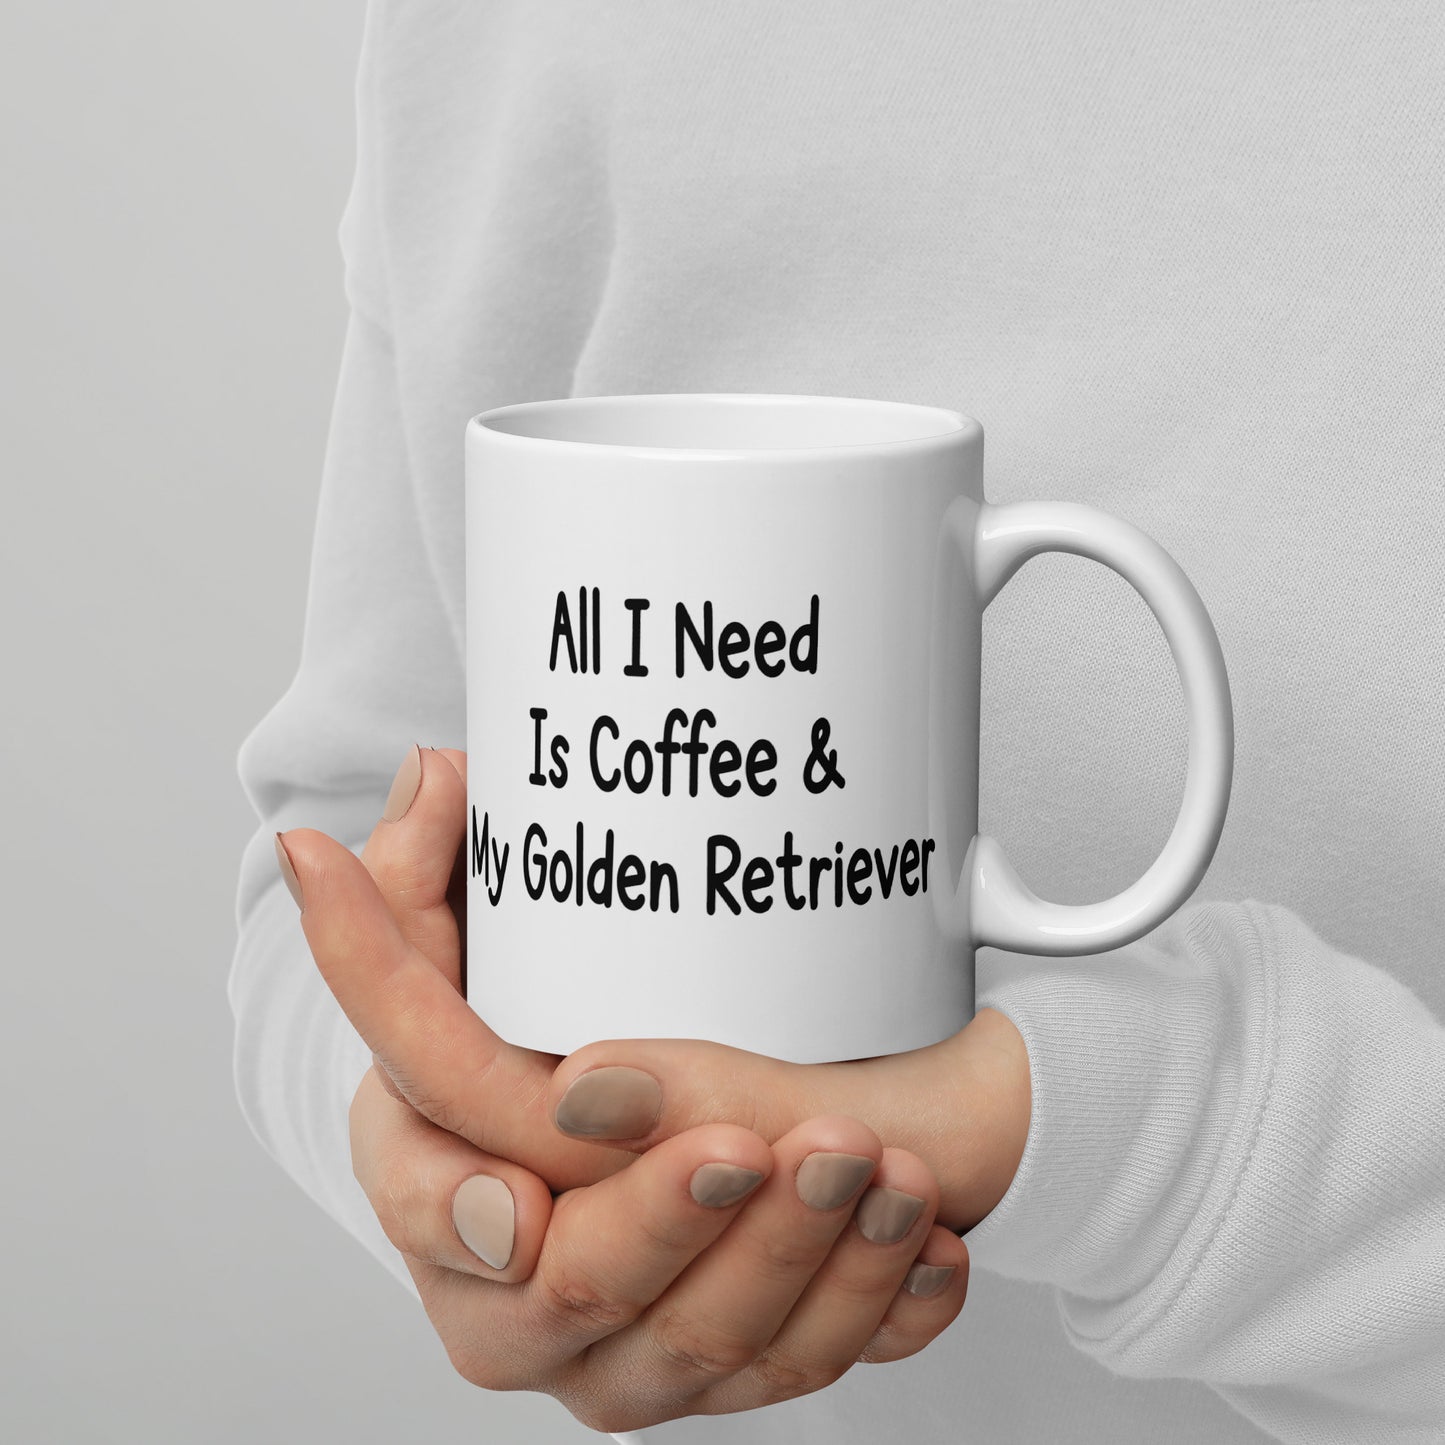 All I need is coffee & my Golden Retriever mug by Dog Artistry.